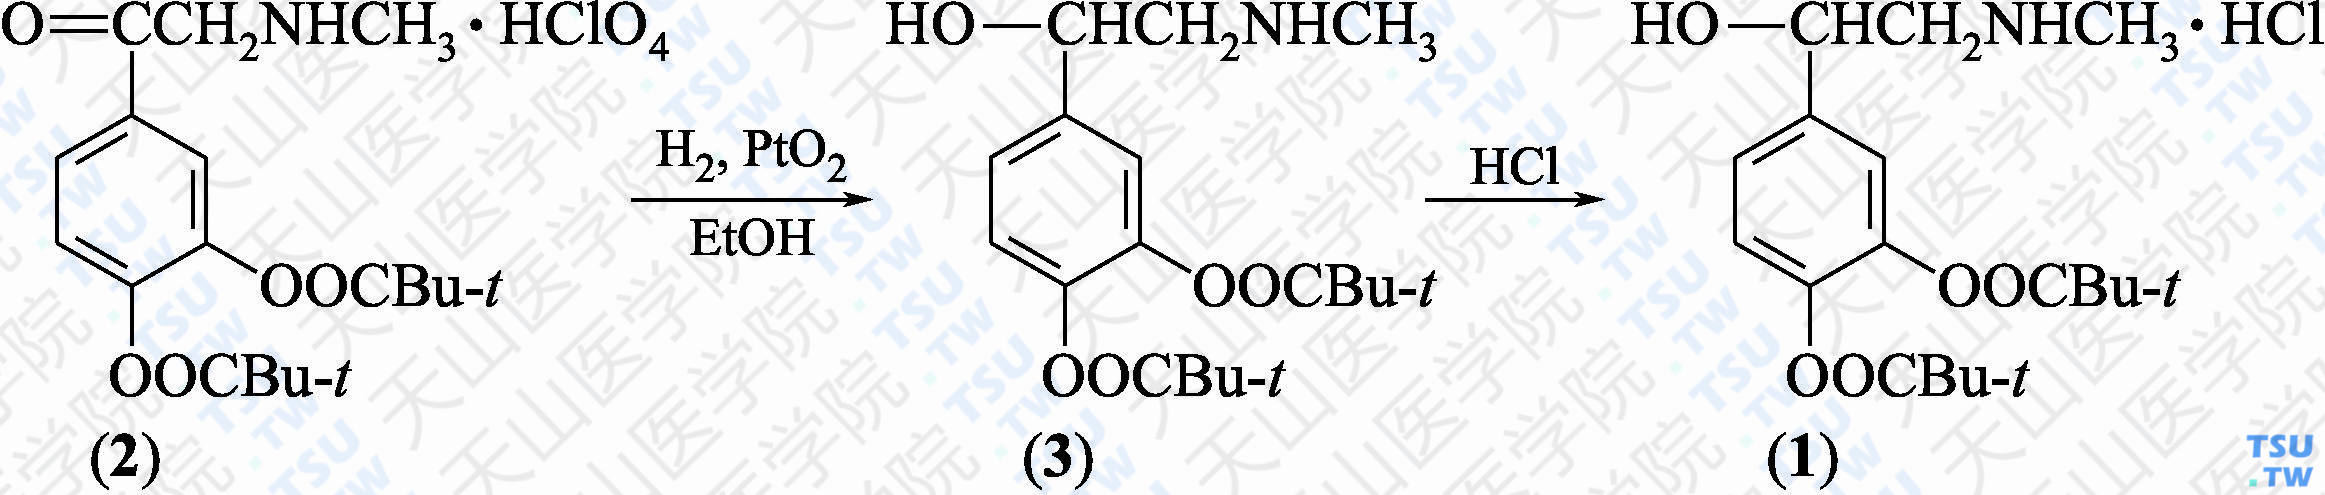 盐酸地匹福林（分子式：C<sub>19</sub>H<sub>29</sub>NO<sub>5</sub>·HCl）的合成方法路线及其结构式